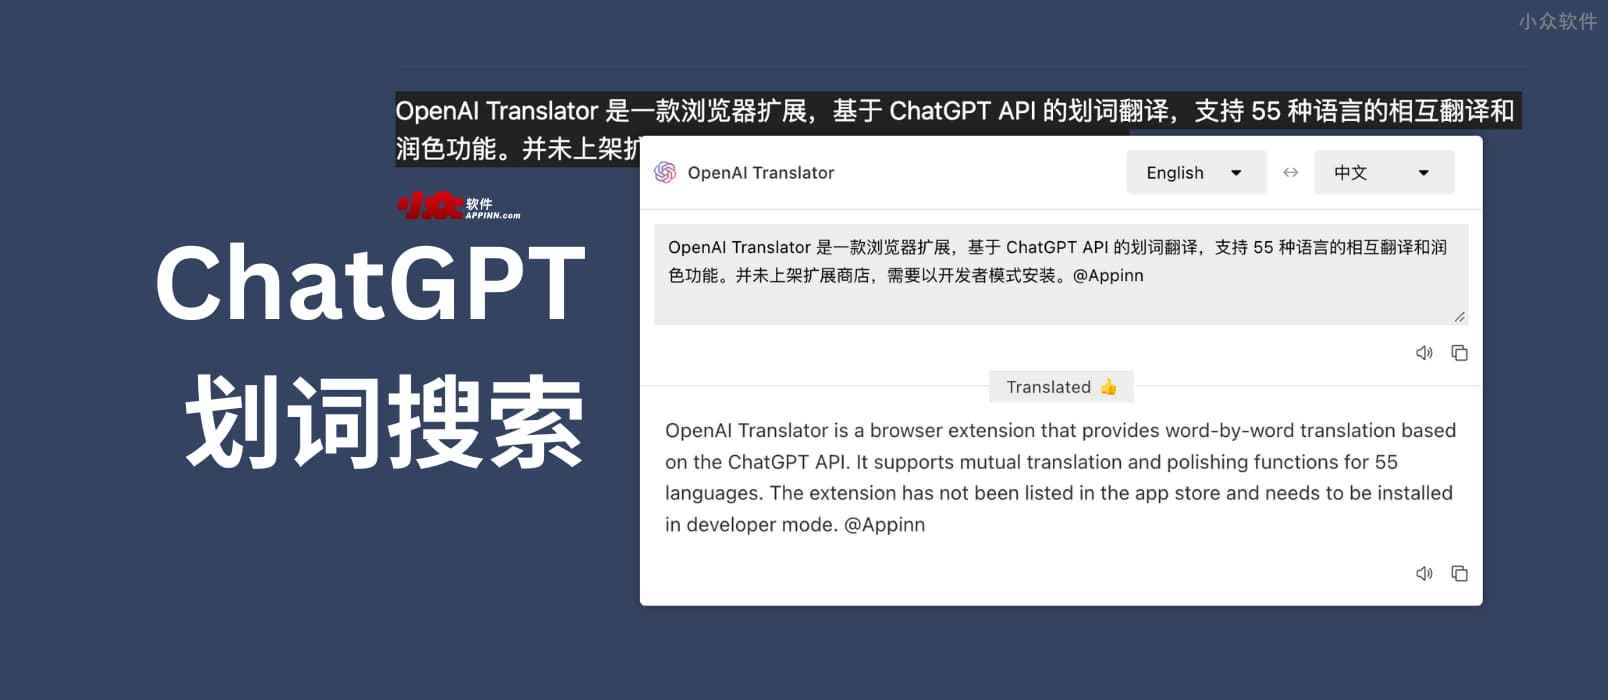 OpenAI Translator - 基于 ChatGPT API 的划词翻译，55 种语言互译[Chrome]